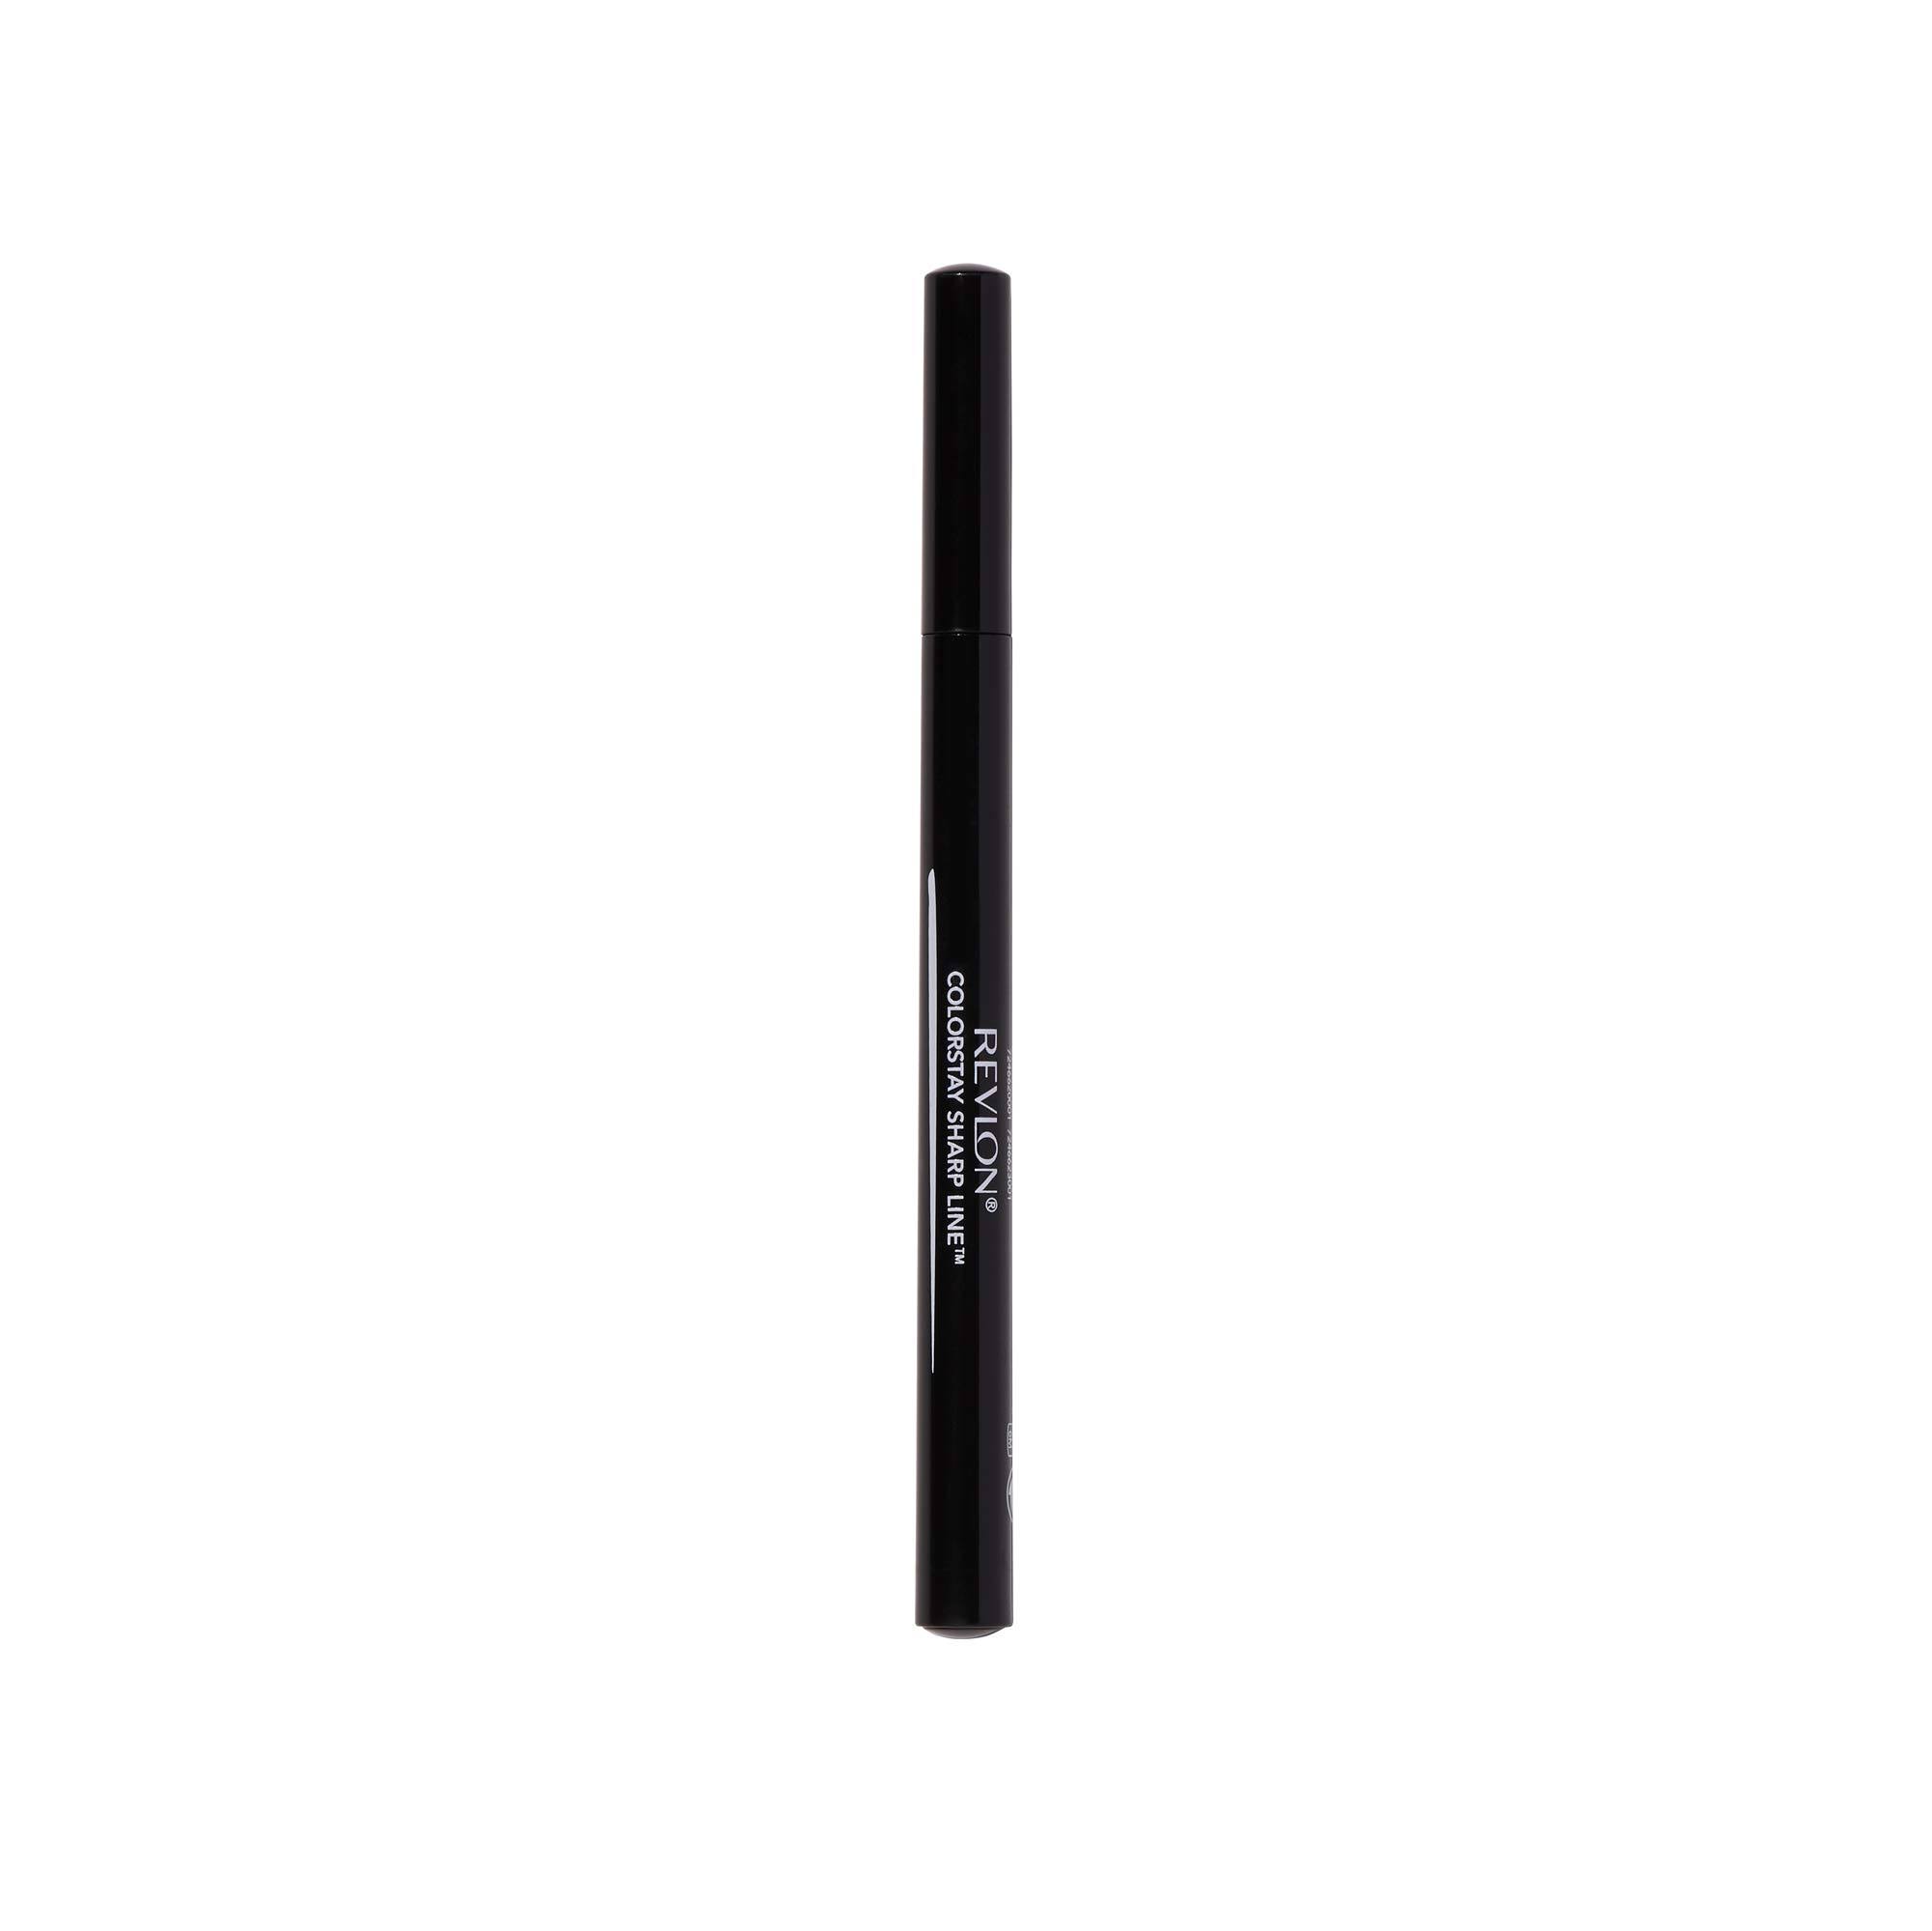 Revlon Colorstay Liquid Eye Pen, Dramatic Wear, Blackest Black 003, Ultra Thin Tip - 0.04 fl oz